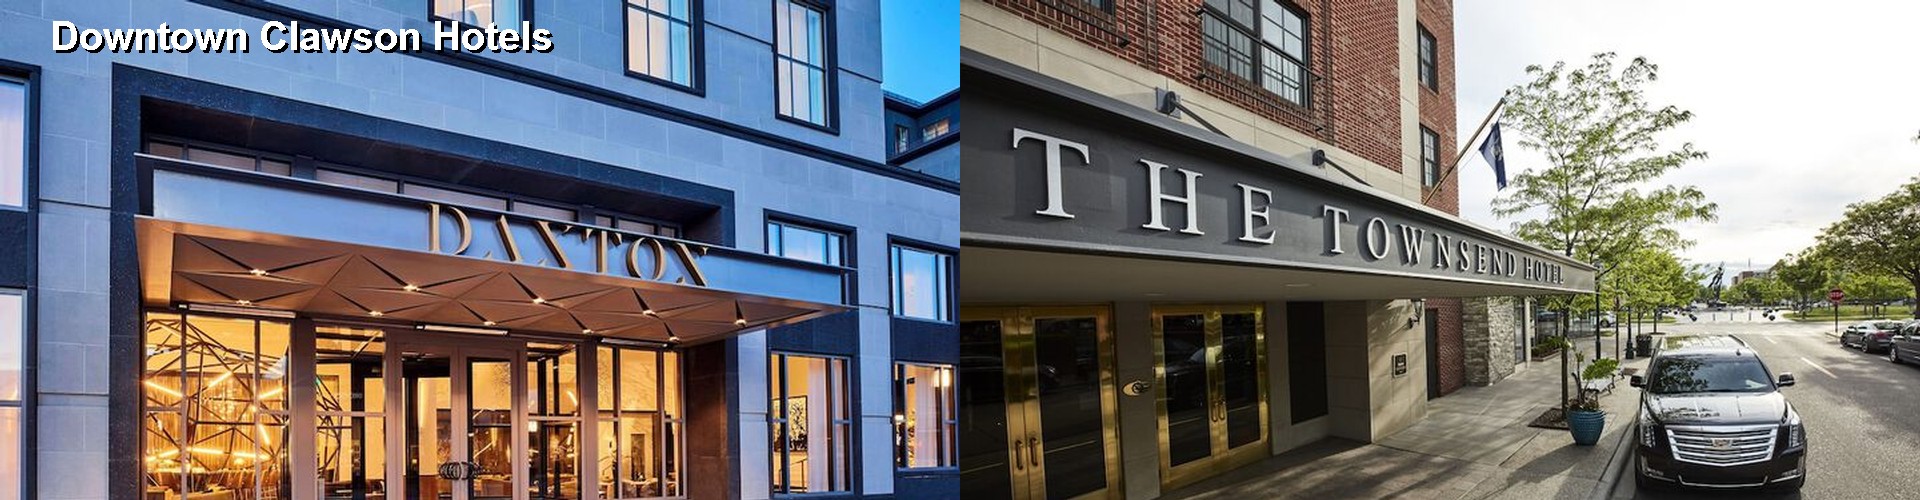 5 Best Hotels near Downtown Clawson